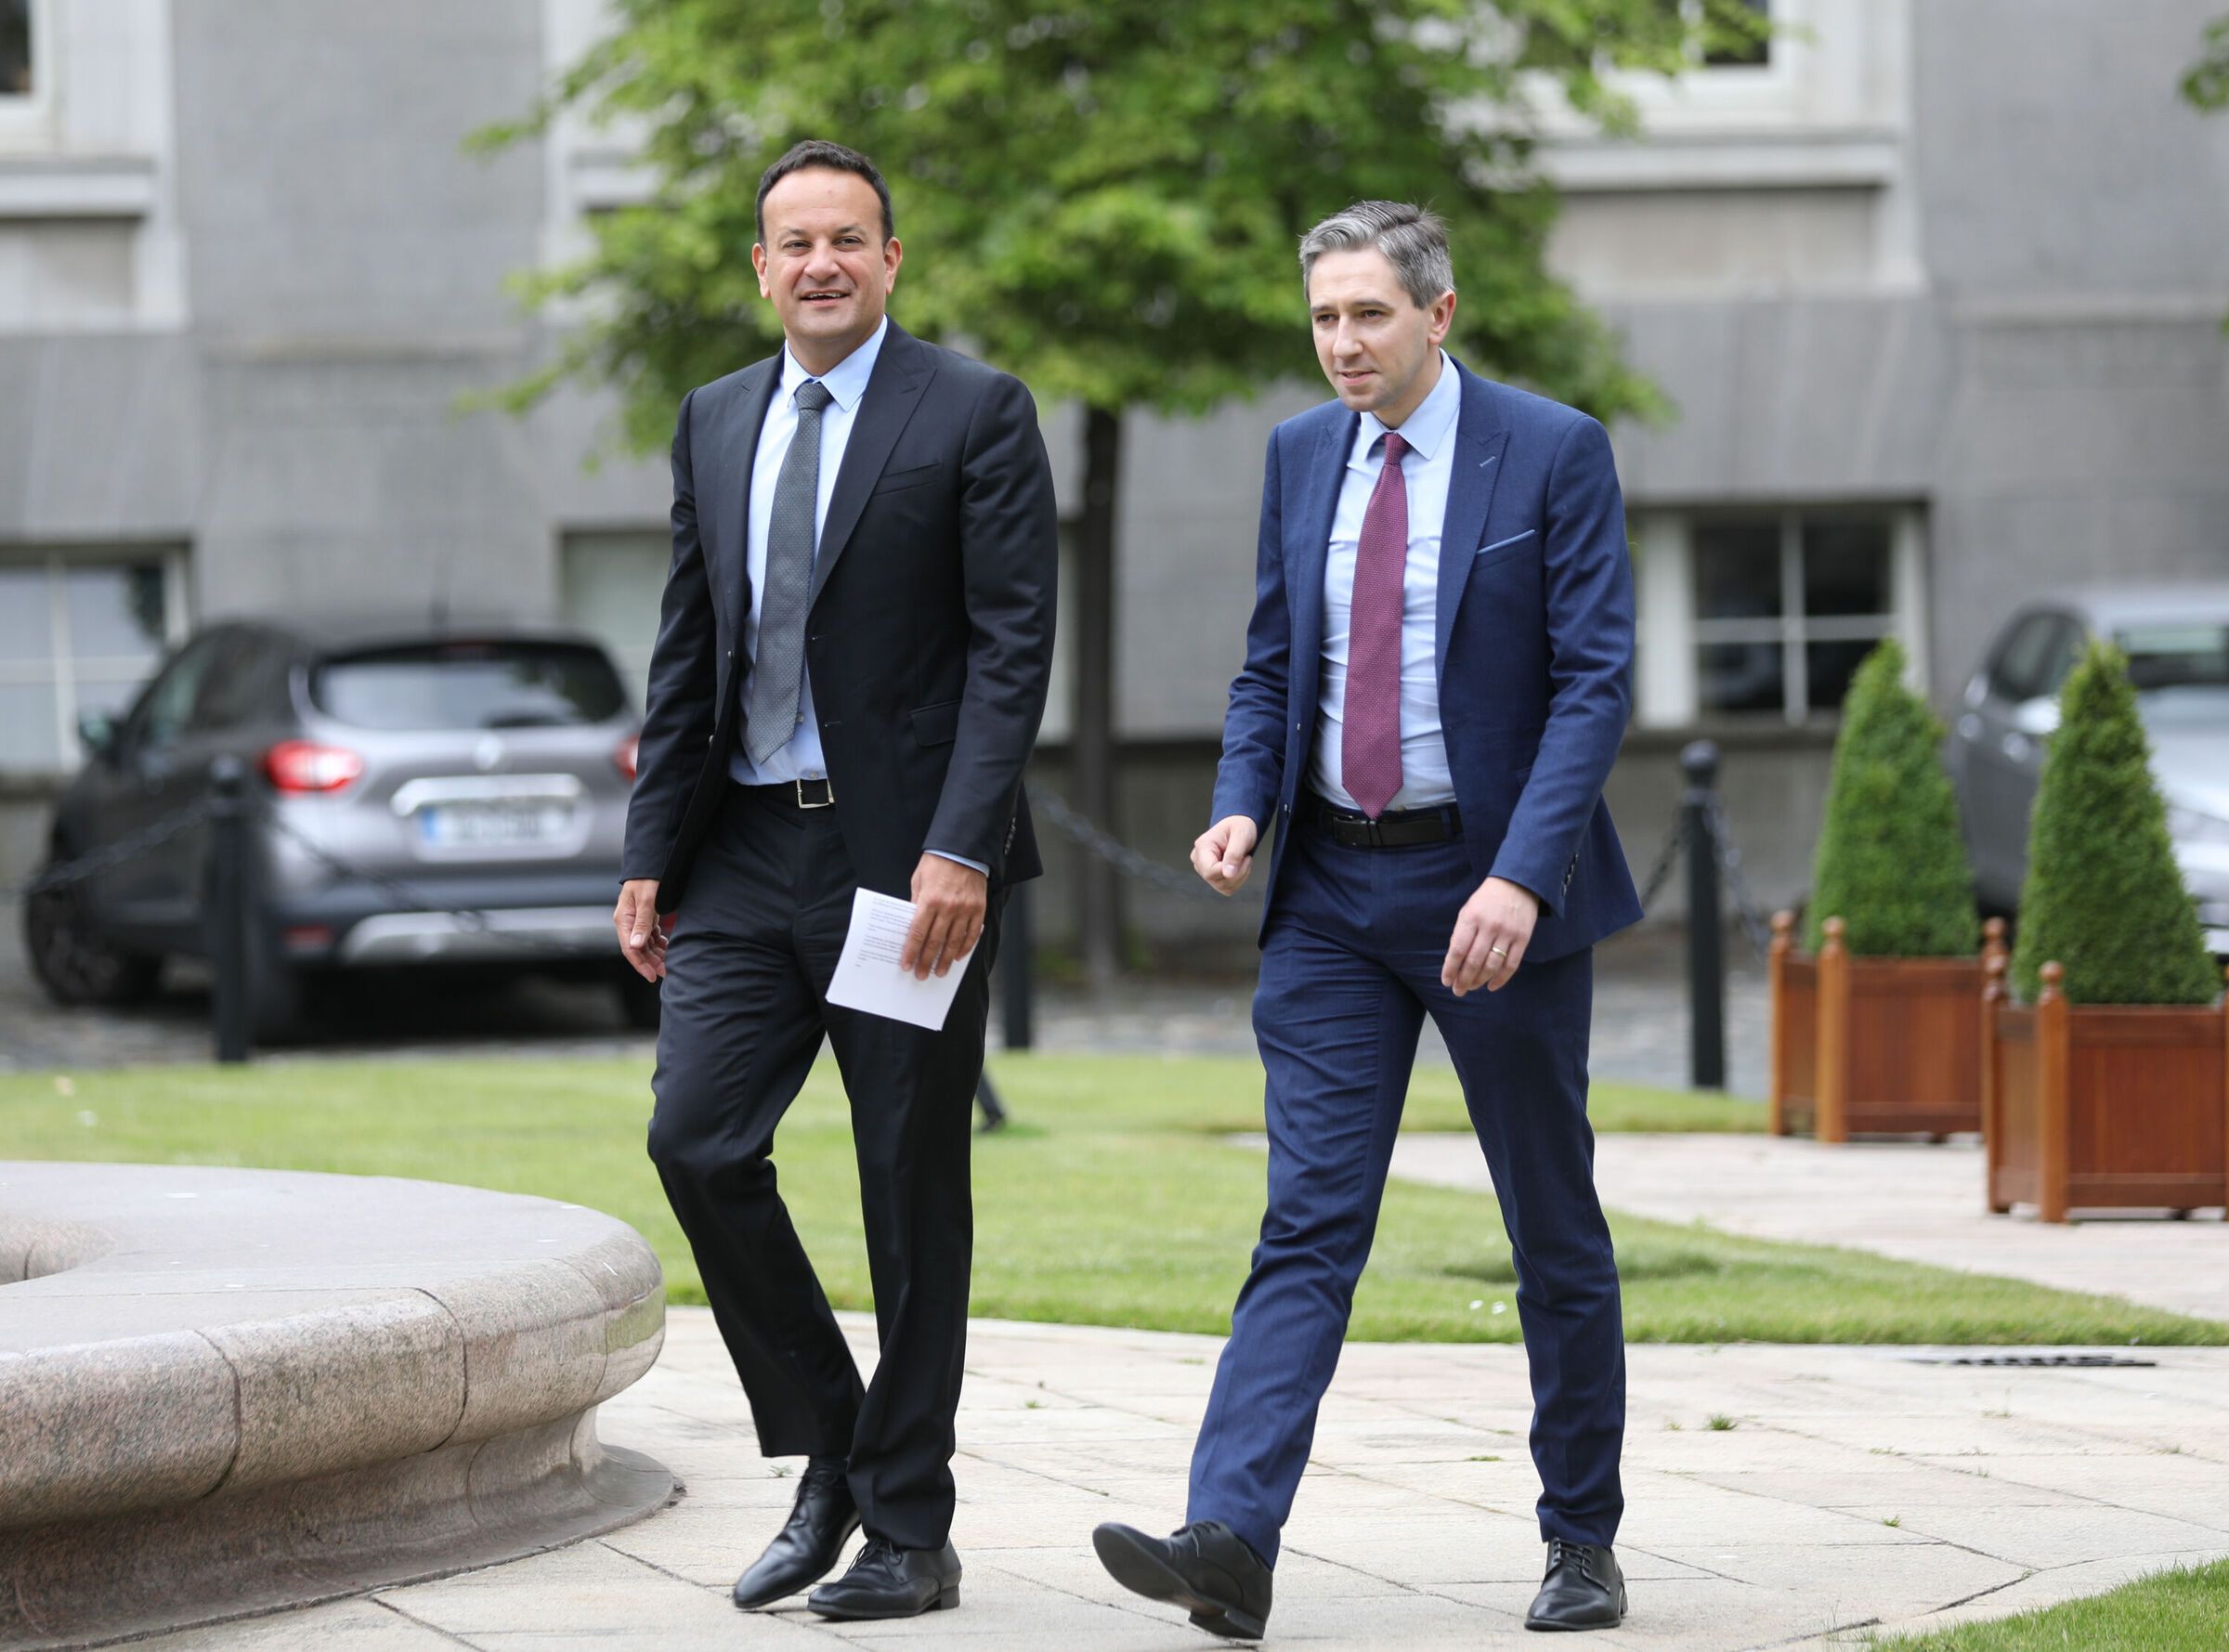 ALLCHANGE: Outgoing Taoiseach Leo Varadkar with his imminent successor, Simon Harris